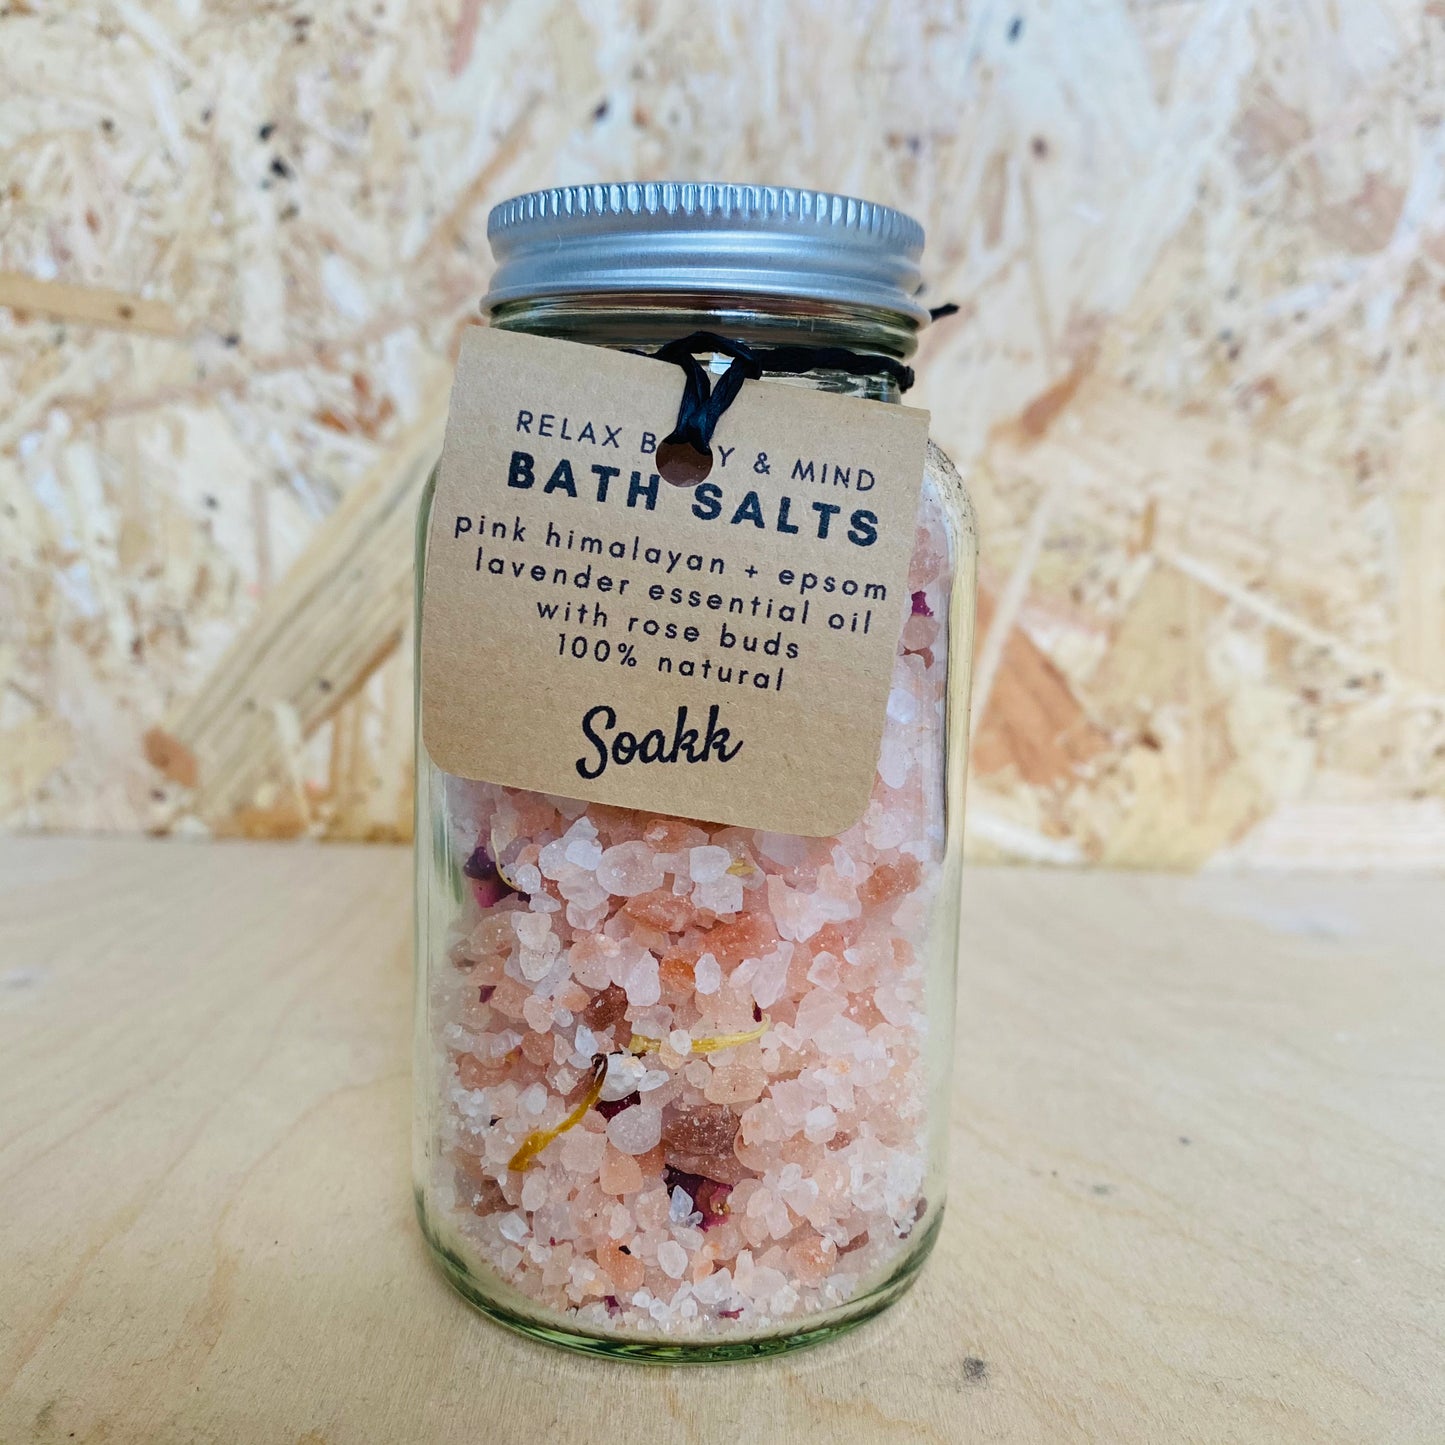 Pink Himalayan + Epsom Lavender oil bath salts